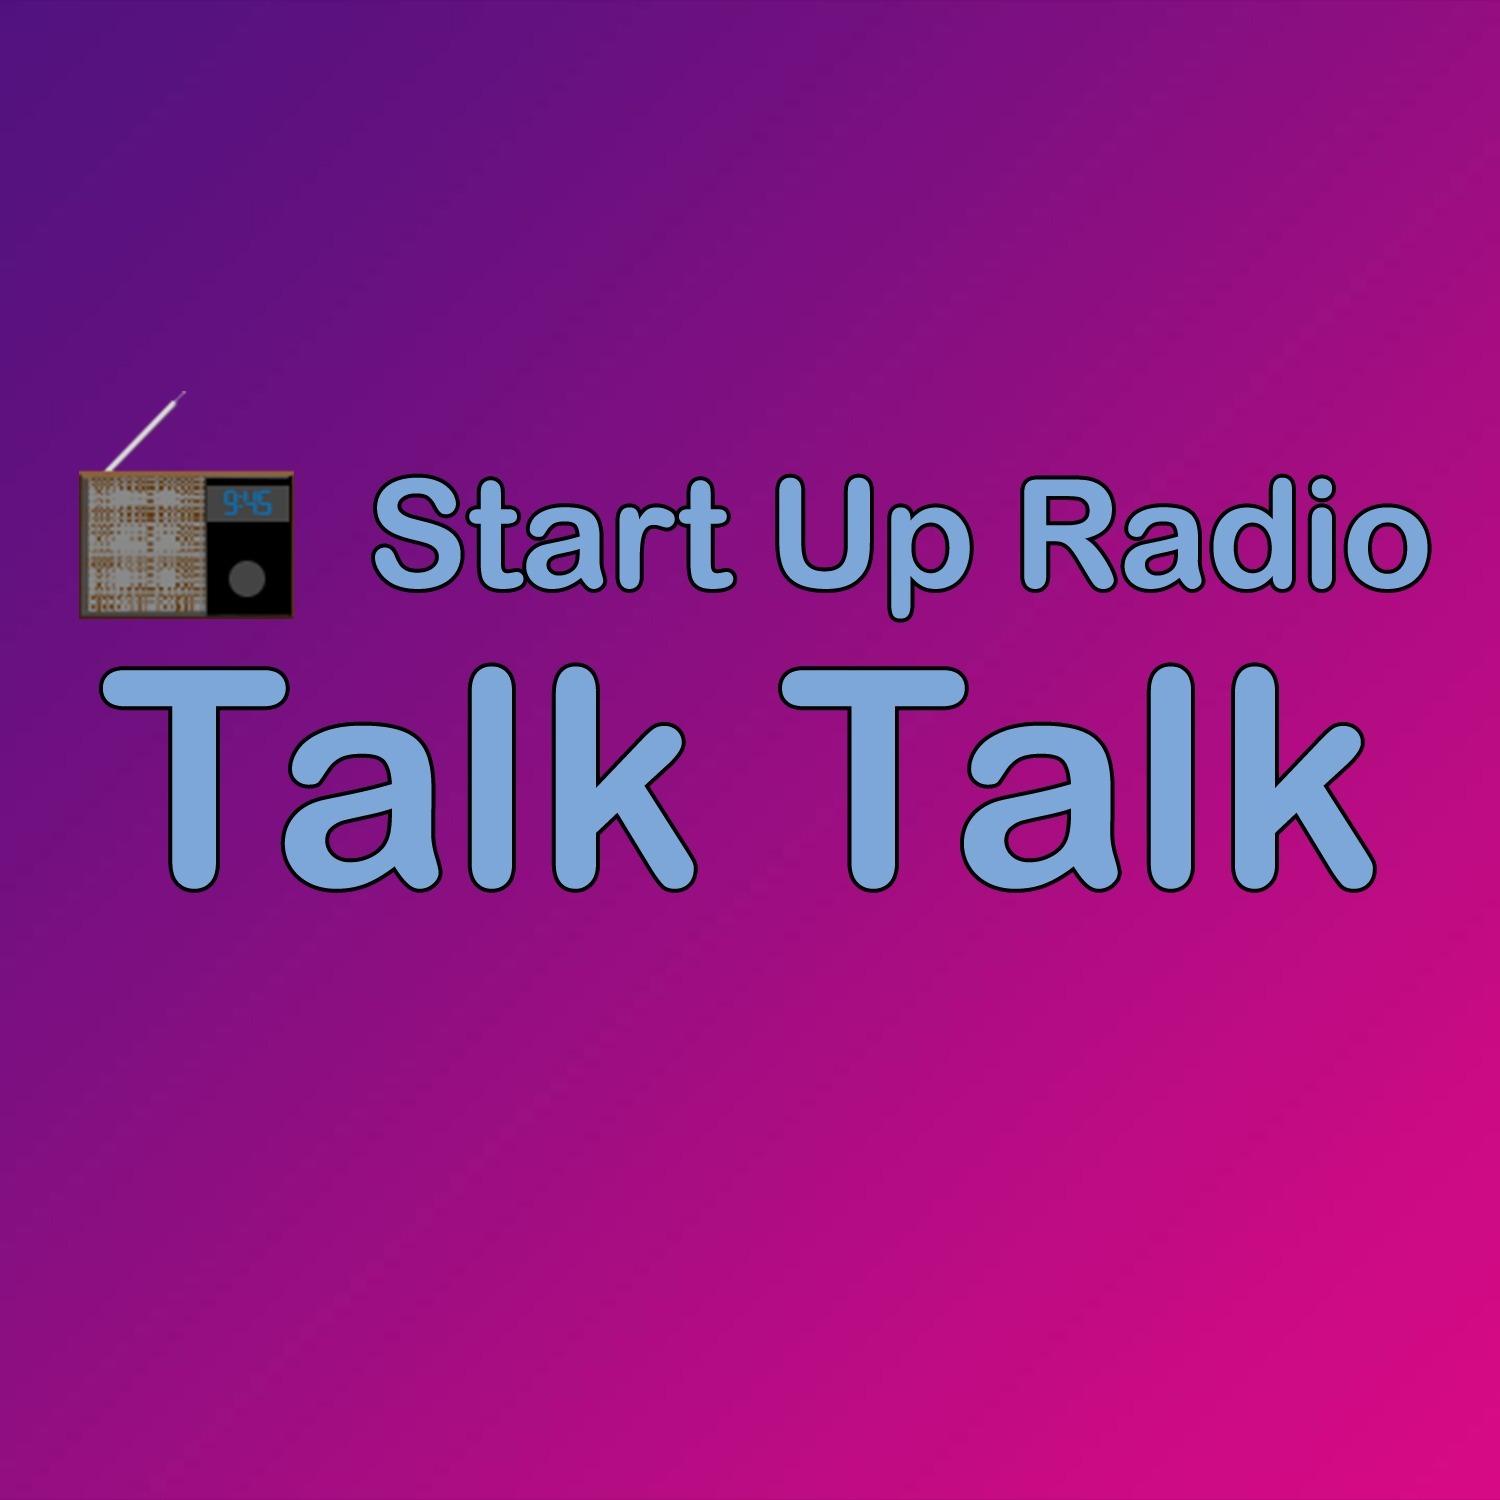 Start Up Radio Talk Talk